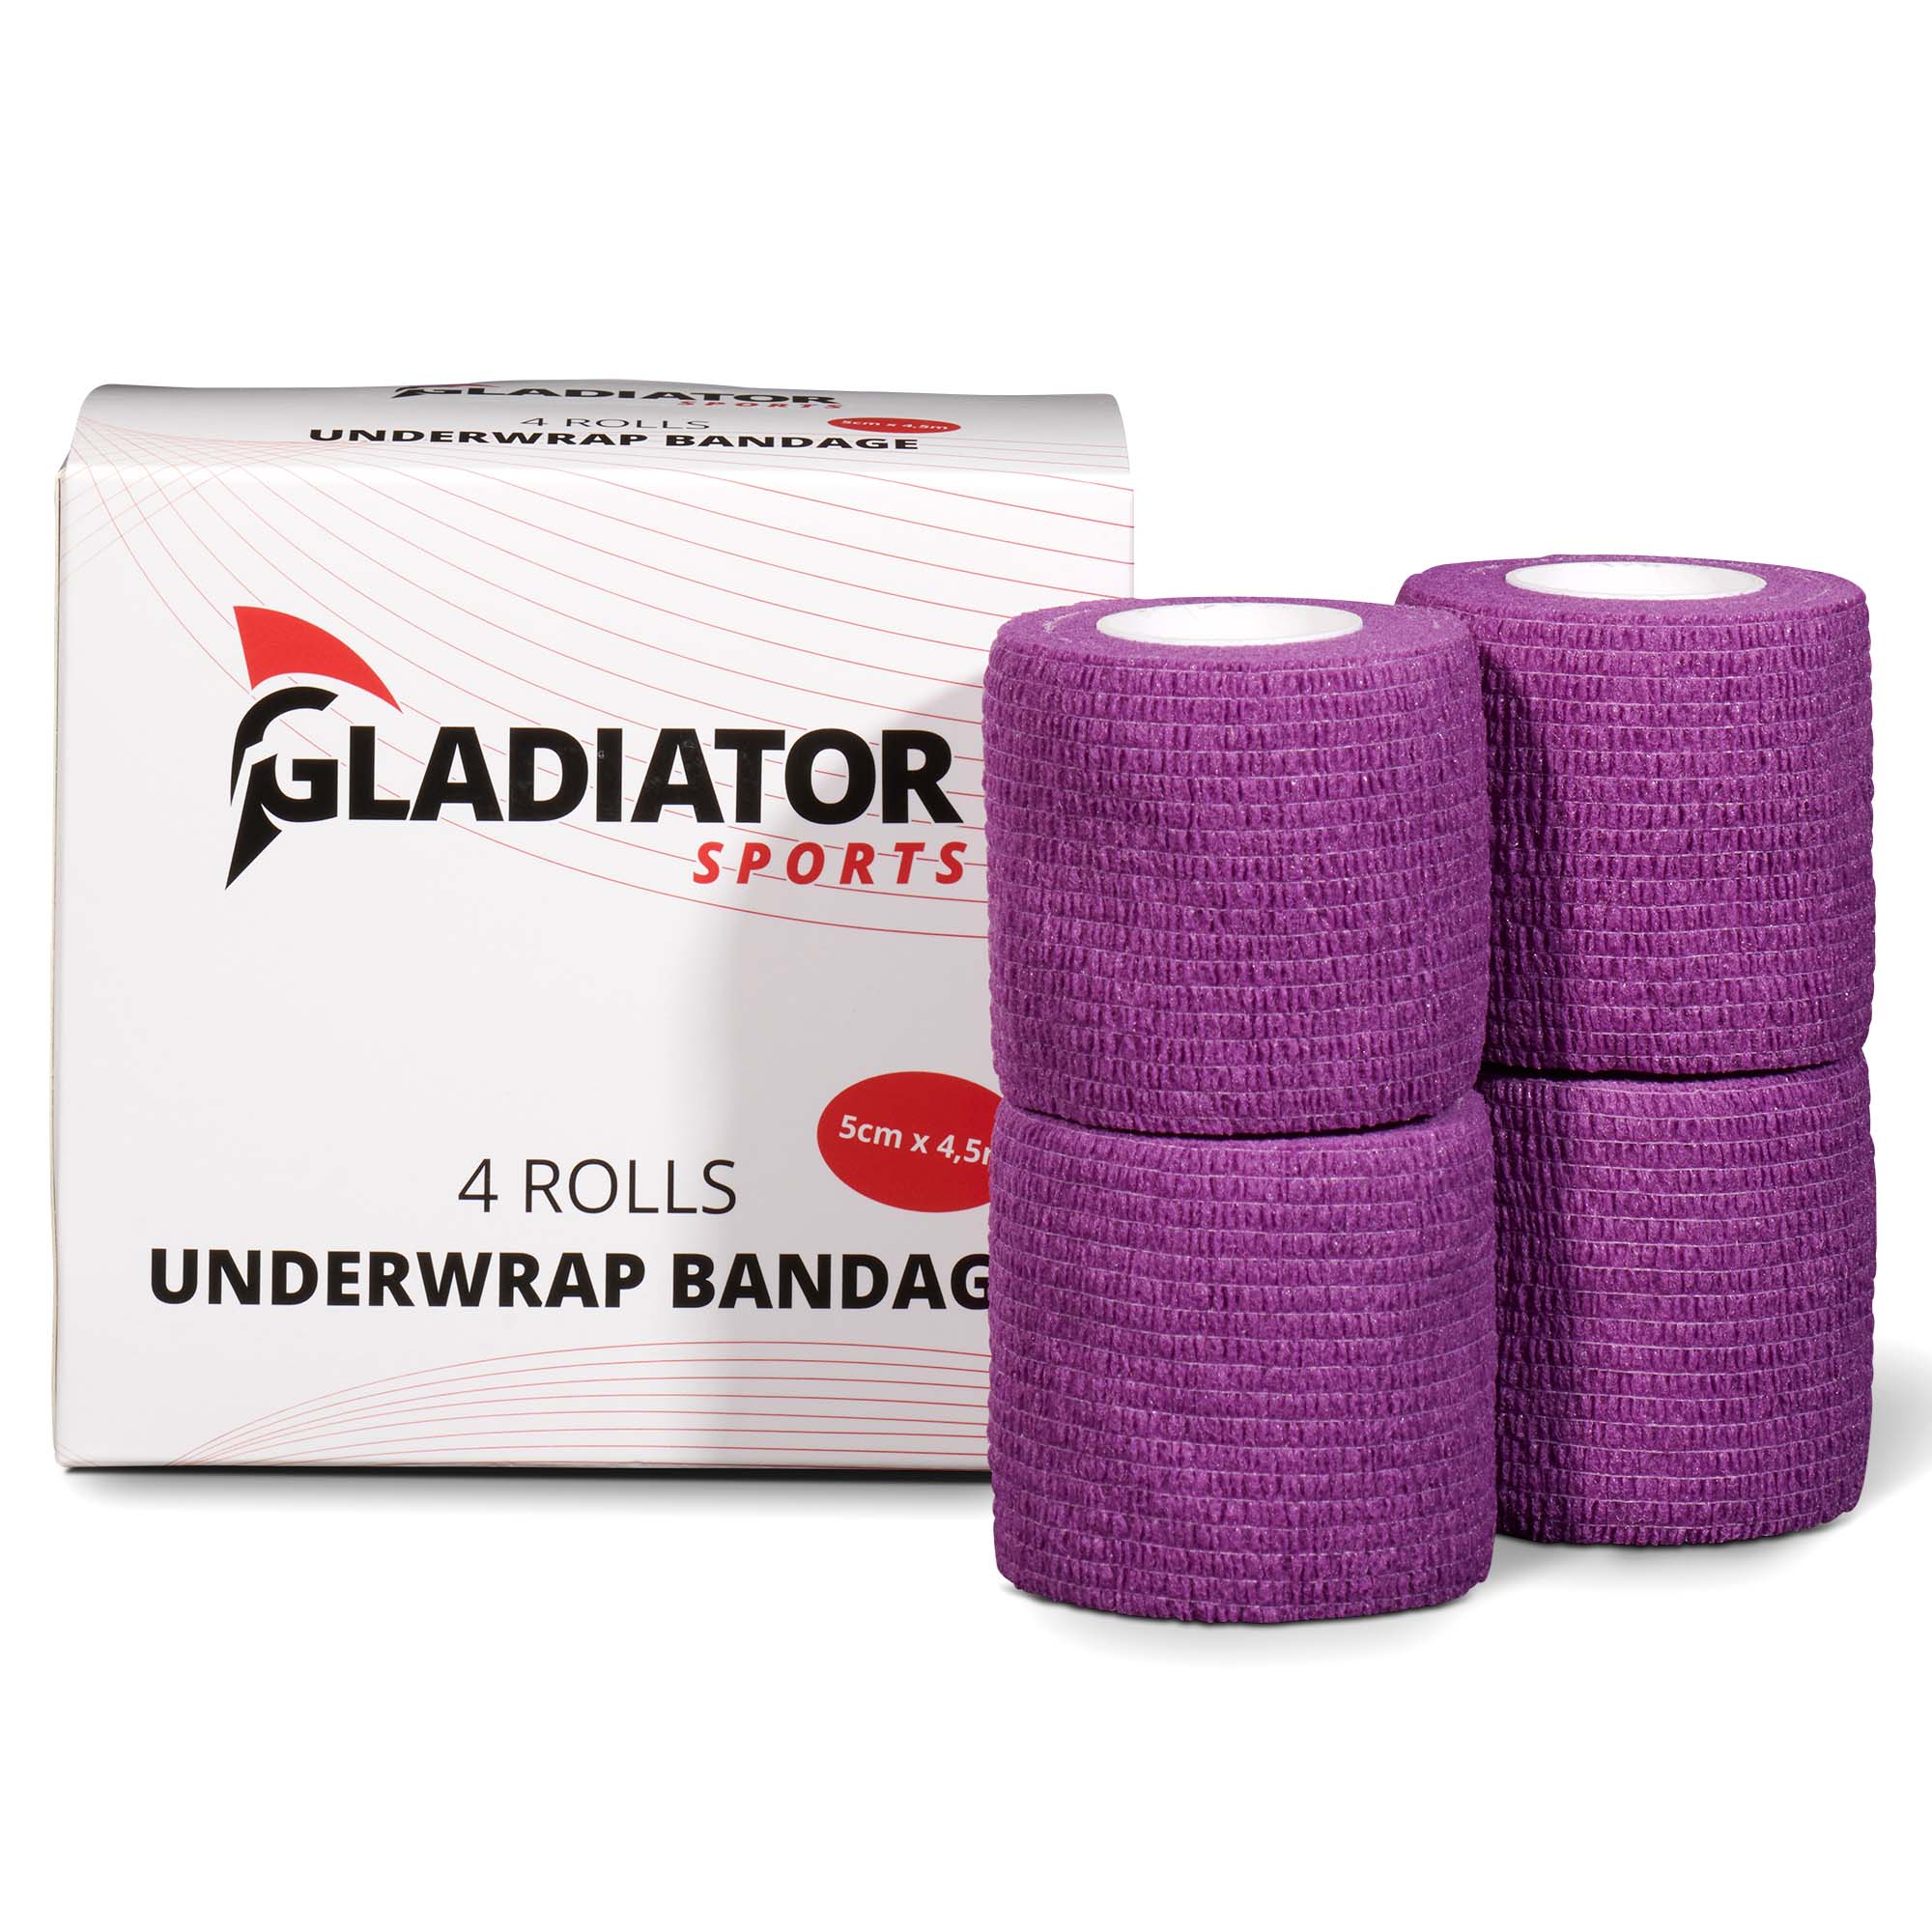 Gladiator Sports underwrap bandage 4 rolls with box purple